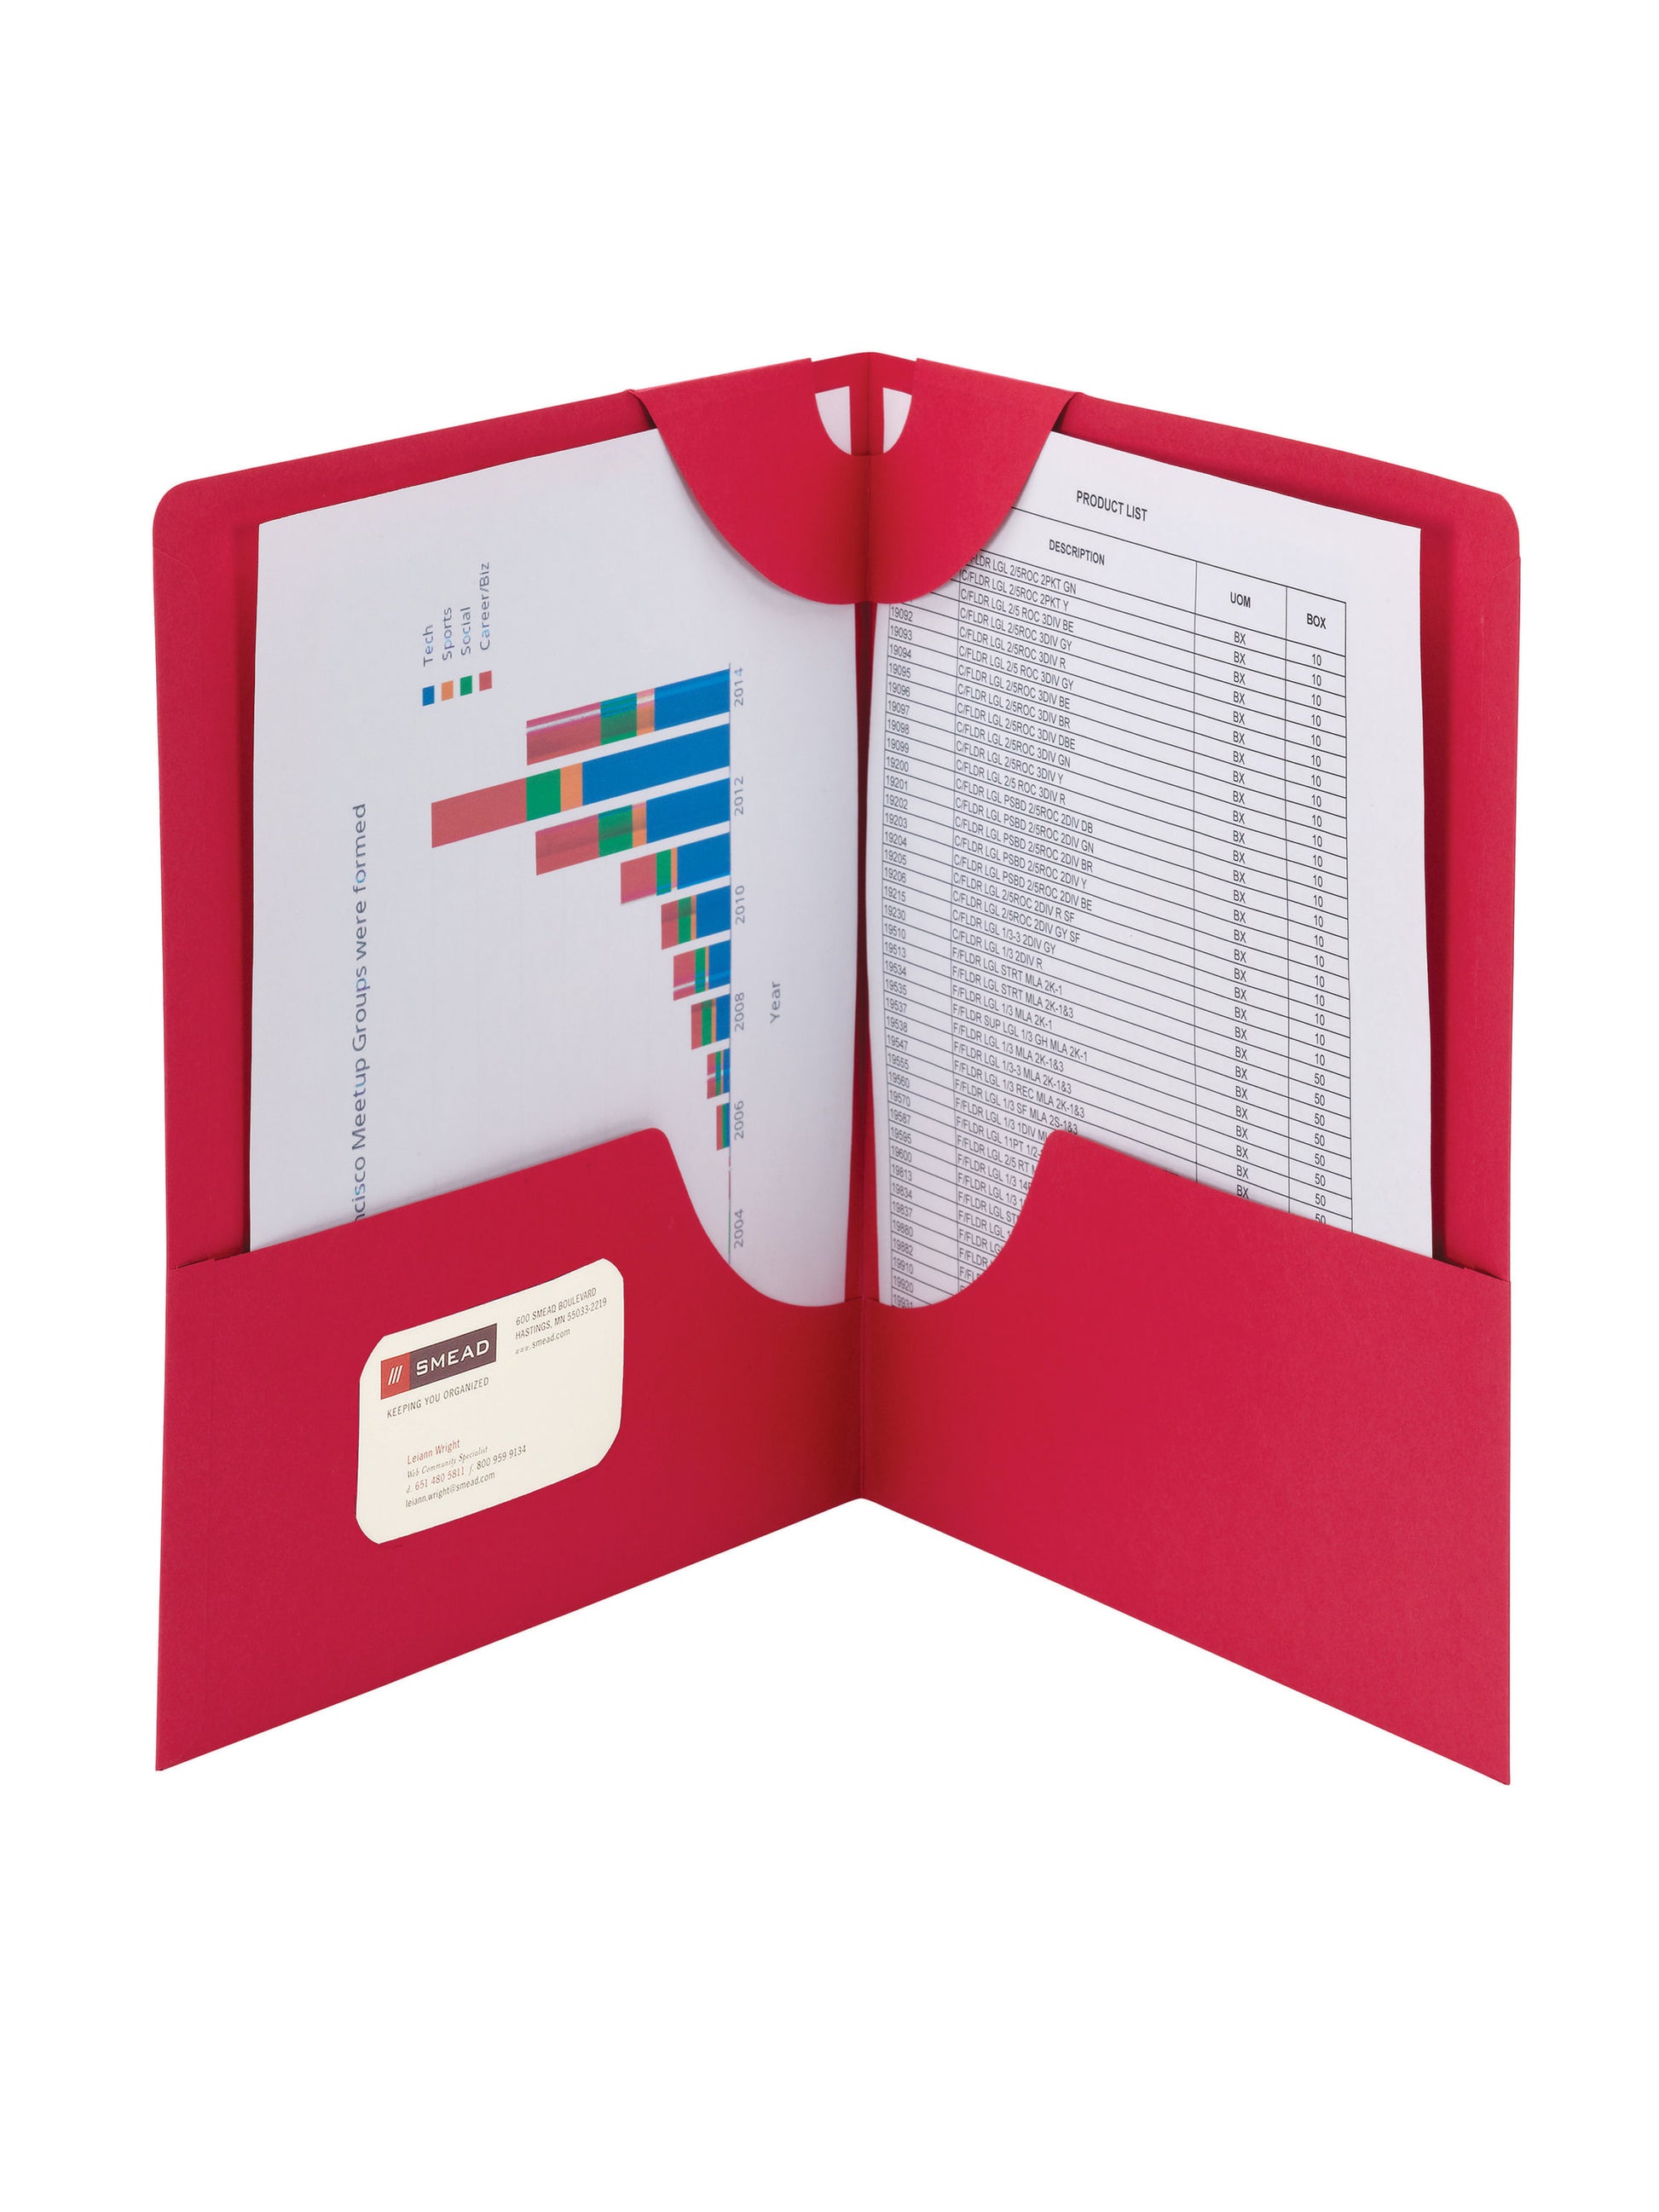 Lockit® Two-Pocket Folders, Red Color, Letter Size, Set of 0, 30086486879805